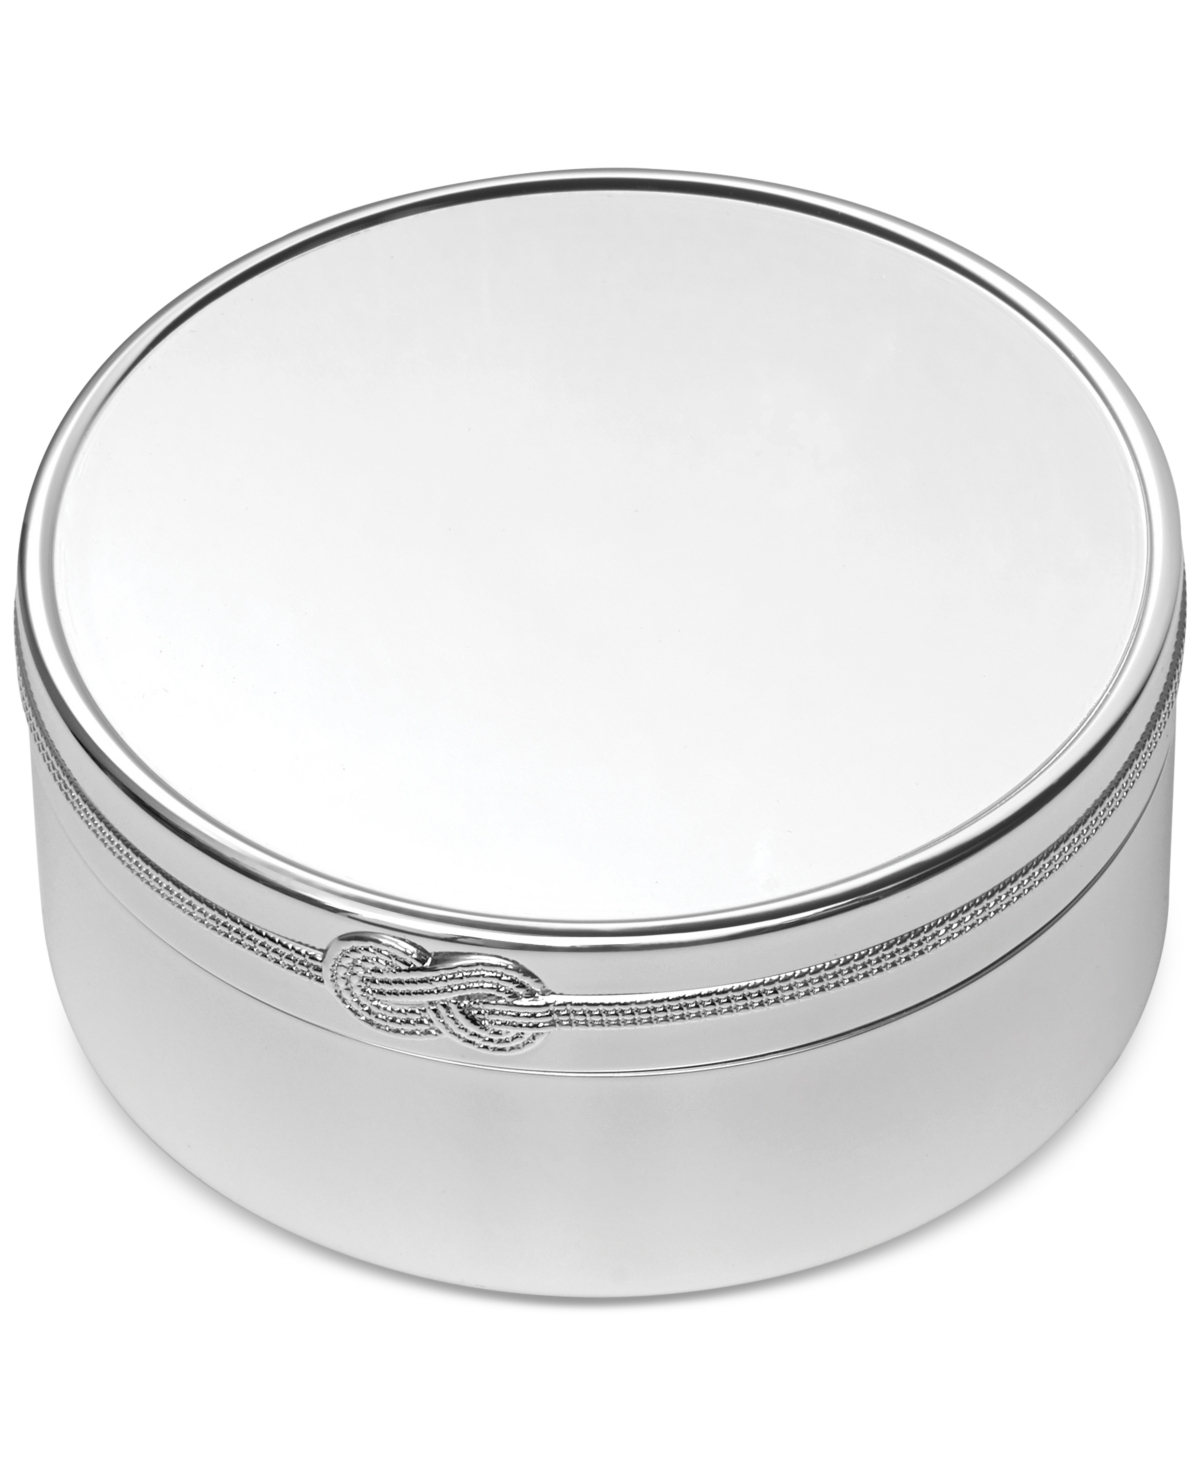 Infinity Large Round Keepsake Box - Silver